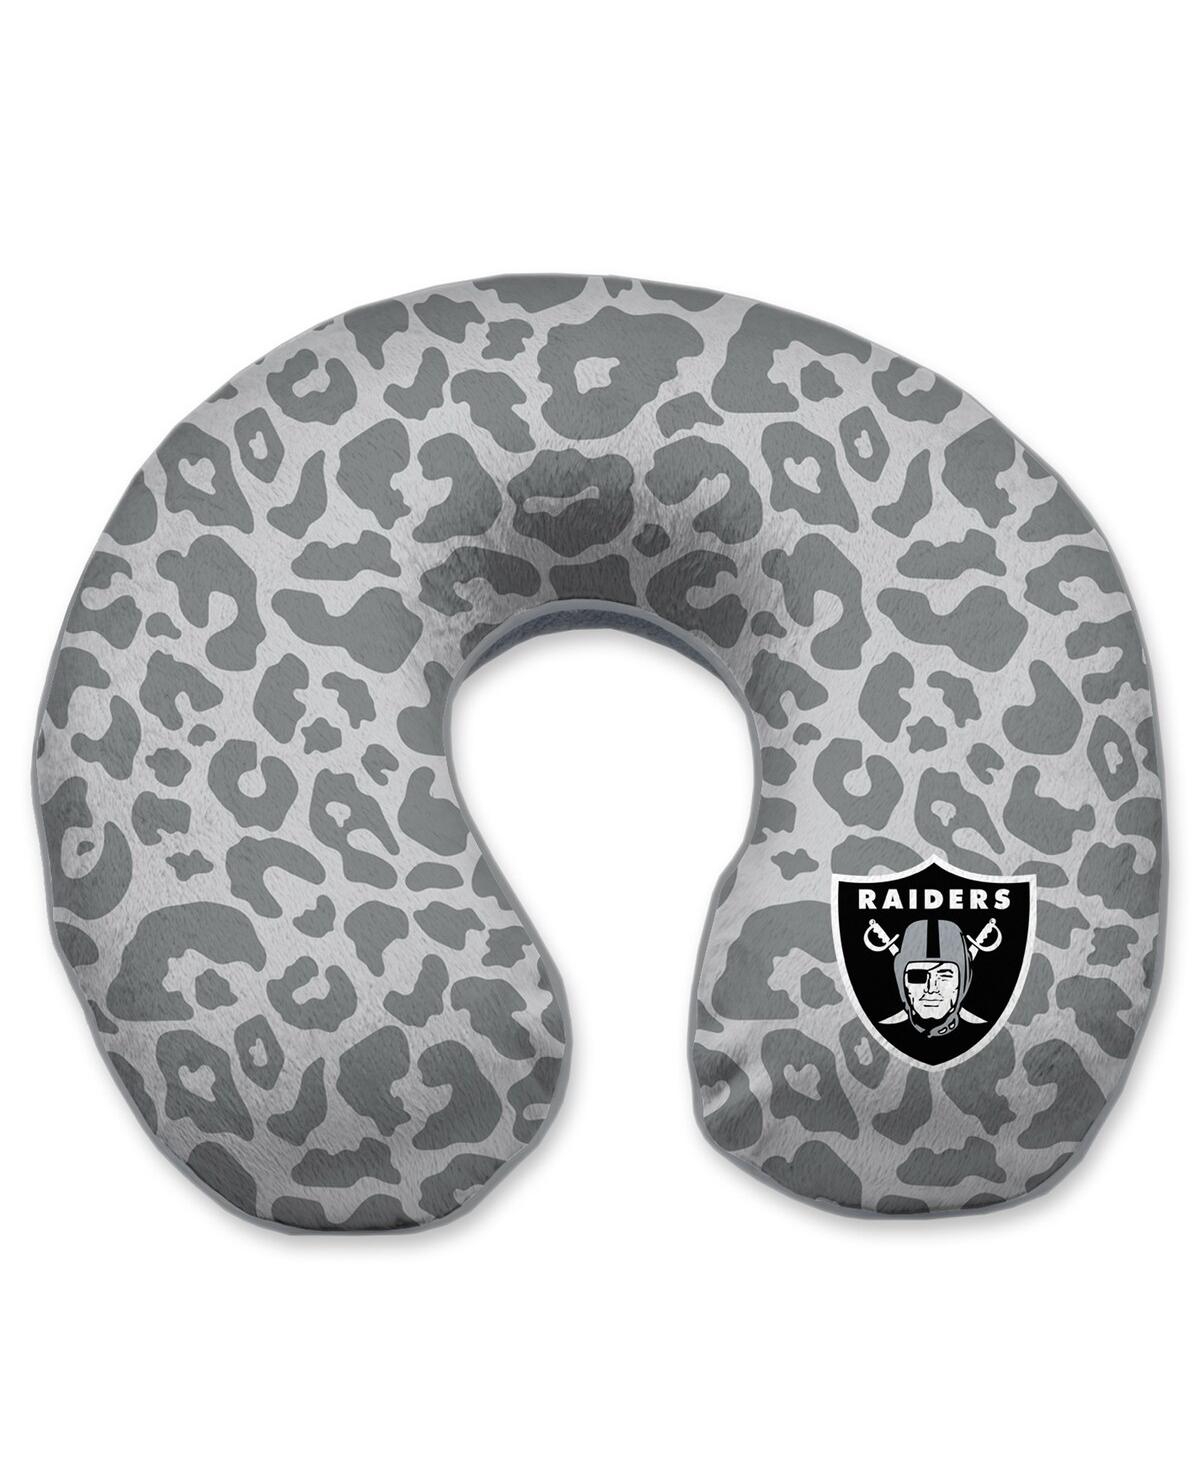 Las Vegas Raiders Cheetah Print Memory Foam Travel Pillow - Gray